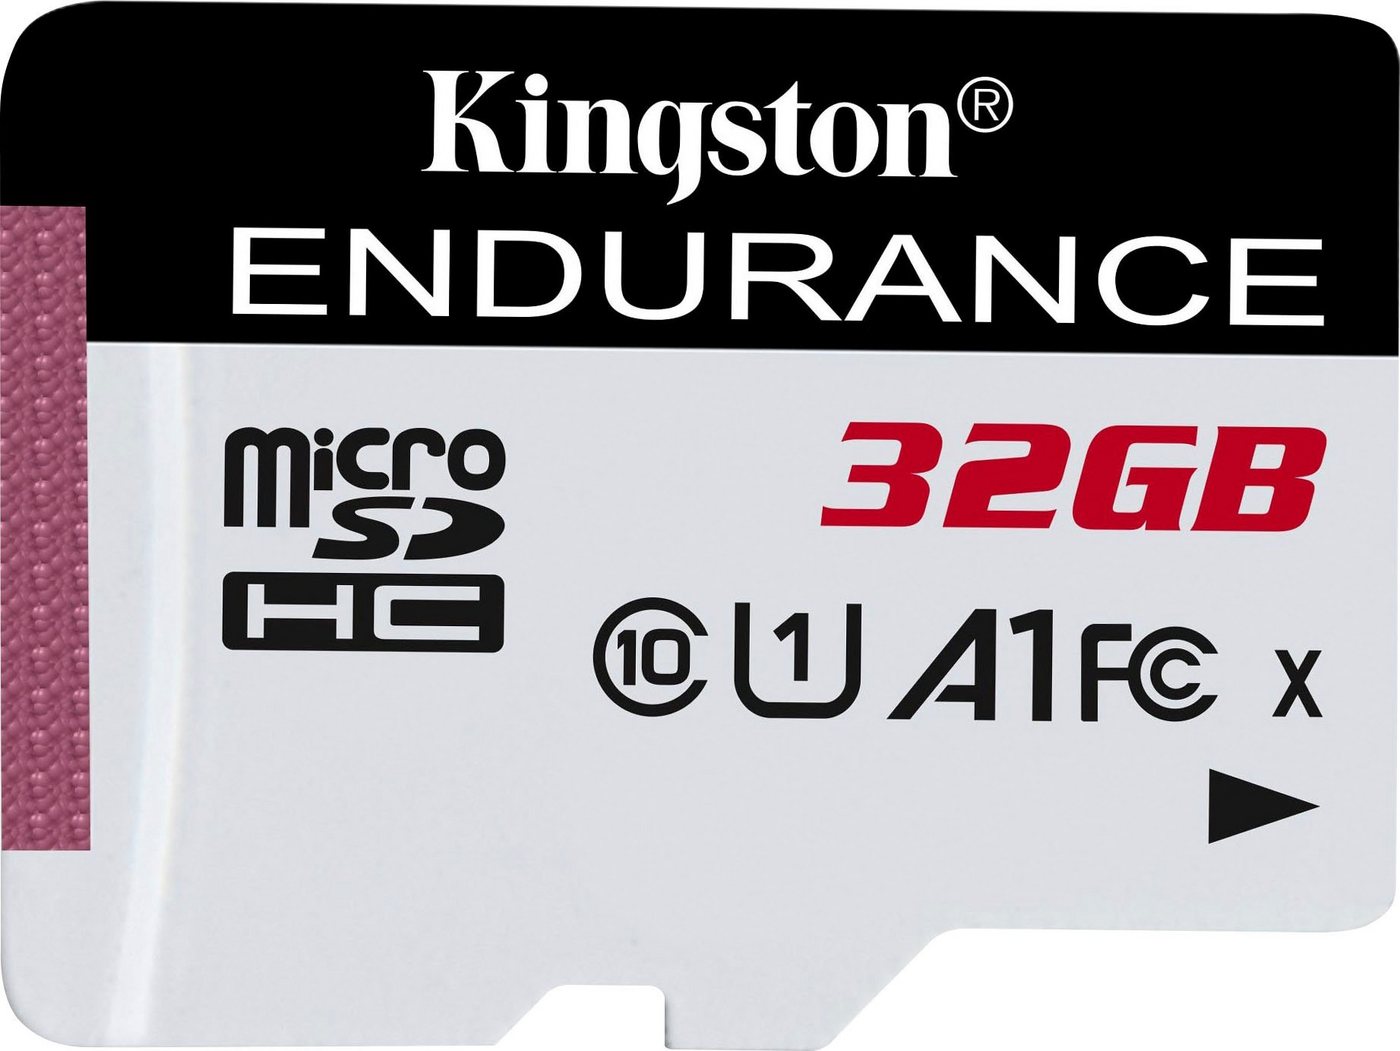 Kingston HIGH-ENDURANCE microSD 32GB Speicherkarte (32 GB, UHS-I Class 10, 95 MB/s Lesegeschwindigkeit) von Kingston